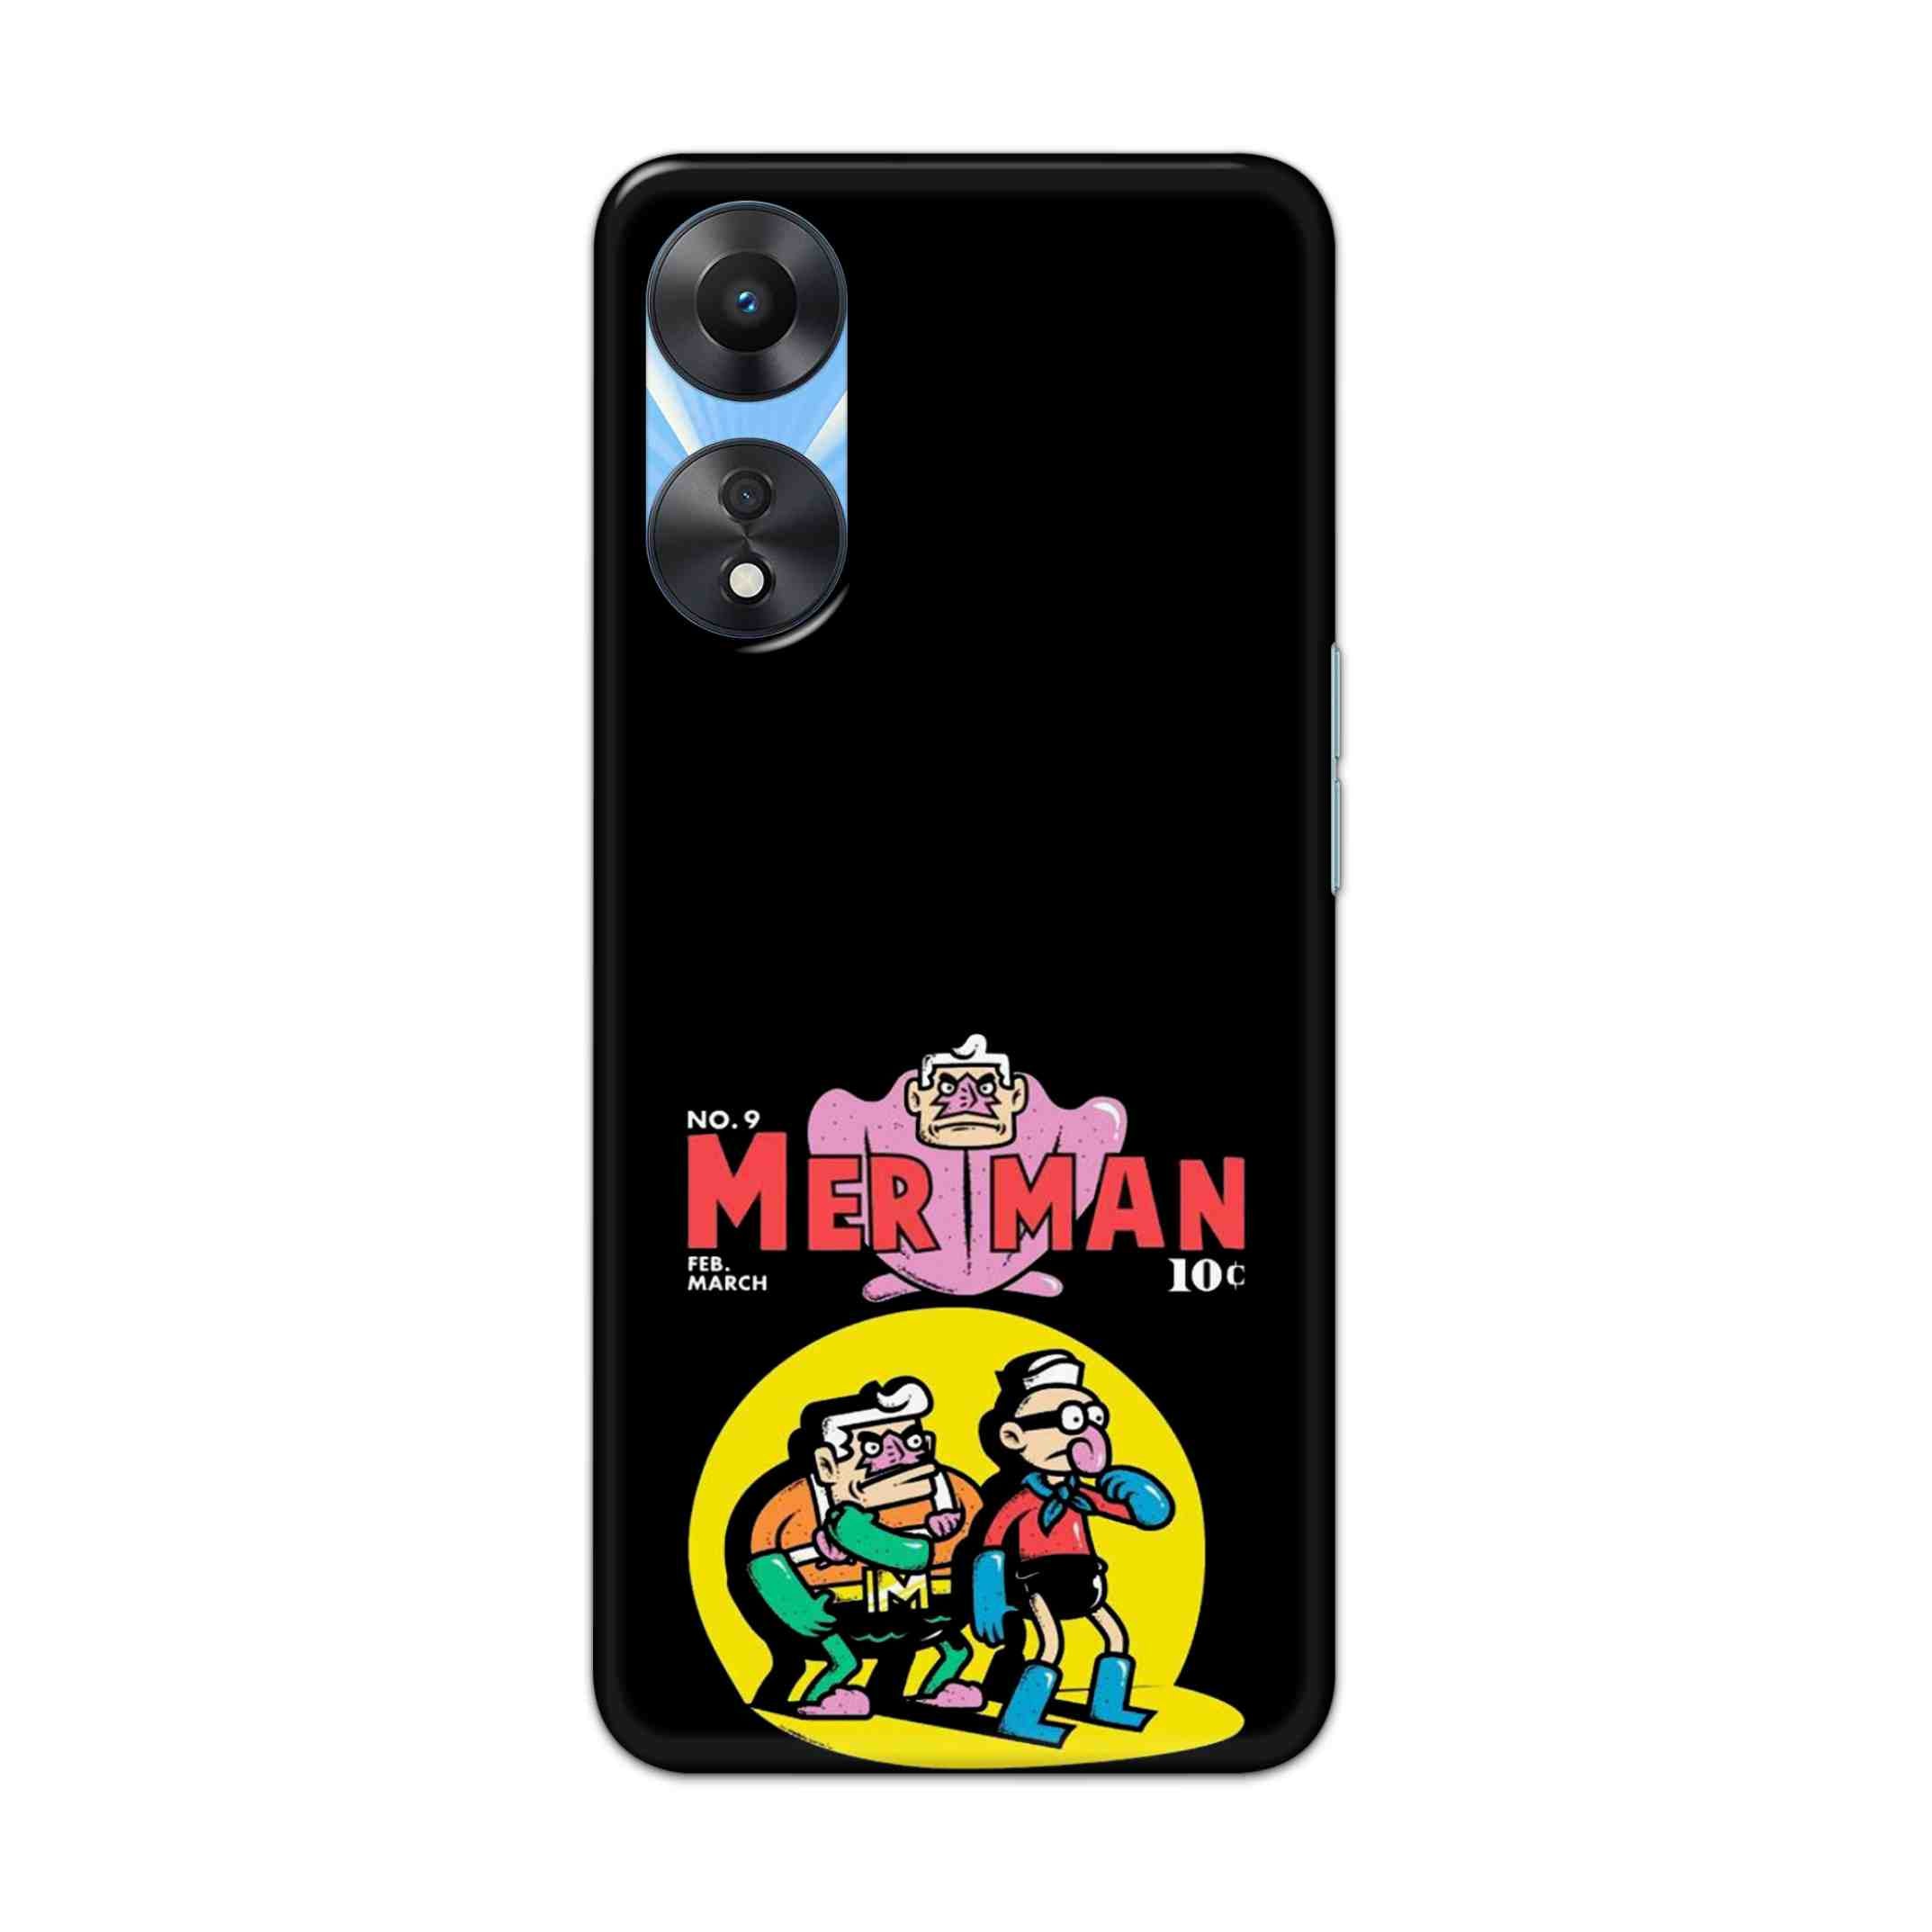 Buy Merman Hard Back Mobile Phone Case Cover For OPPO A78 Online